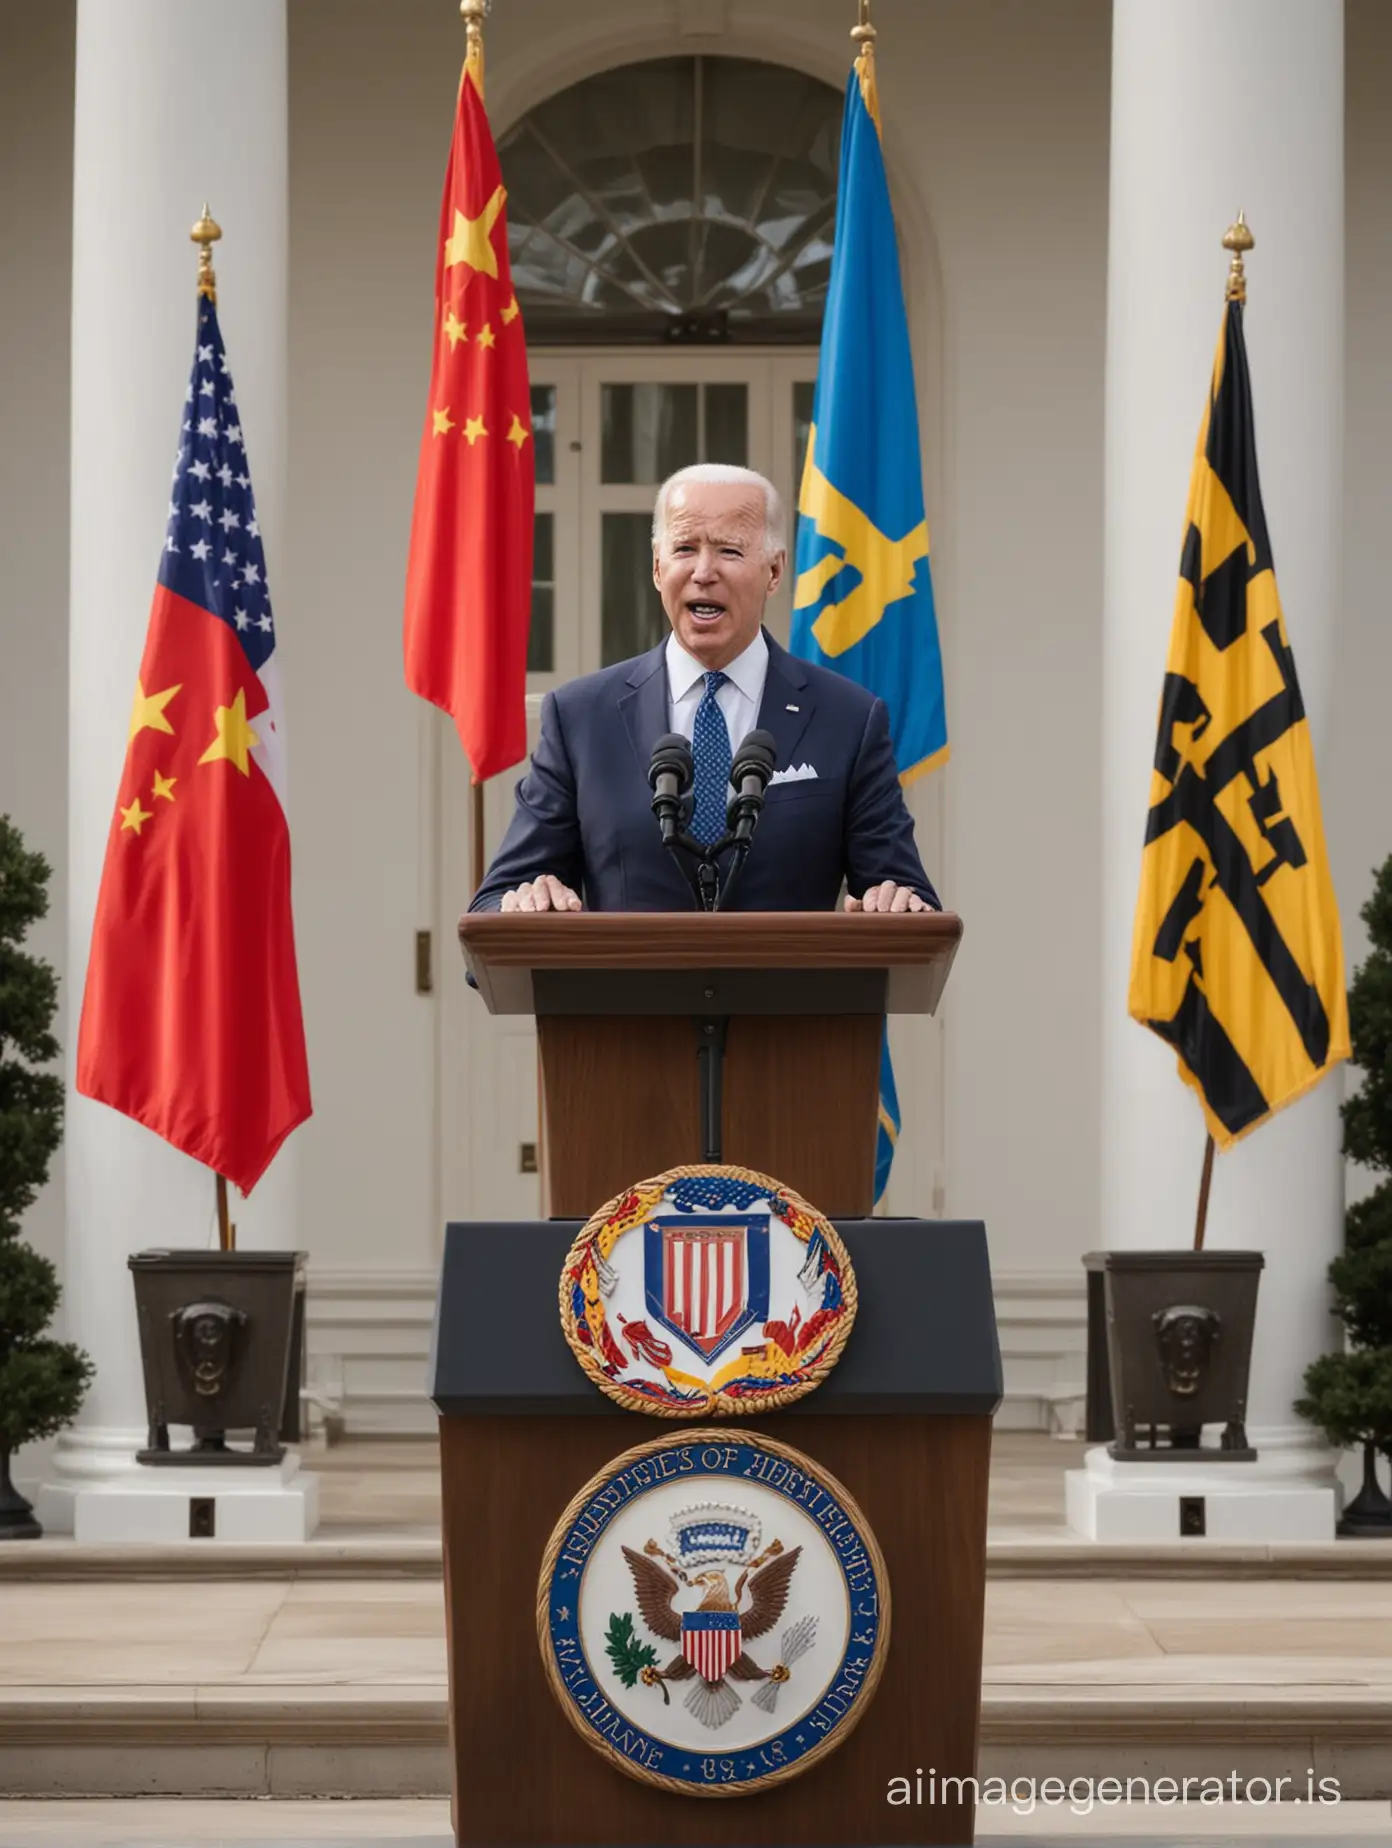 Joe Biden yelling from a podium at the White House. China flag, Ukraine flag, Nazi flag, Nazi SS troupe in the background